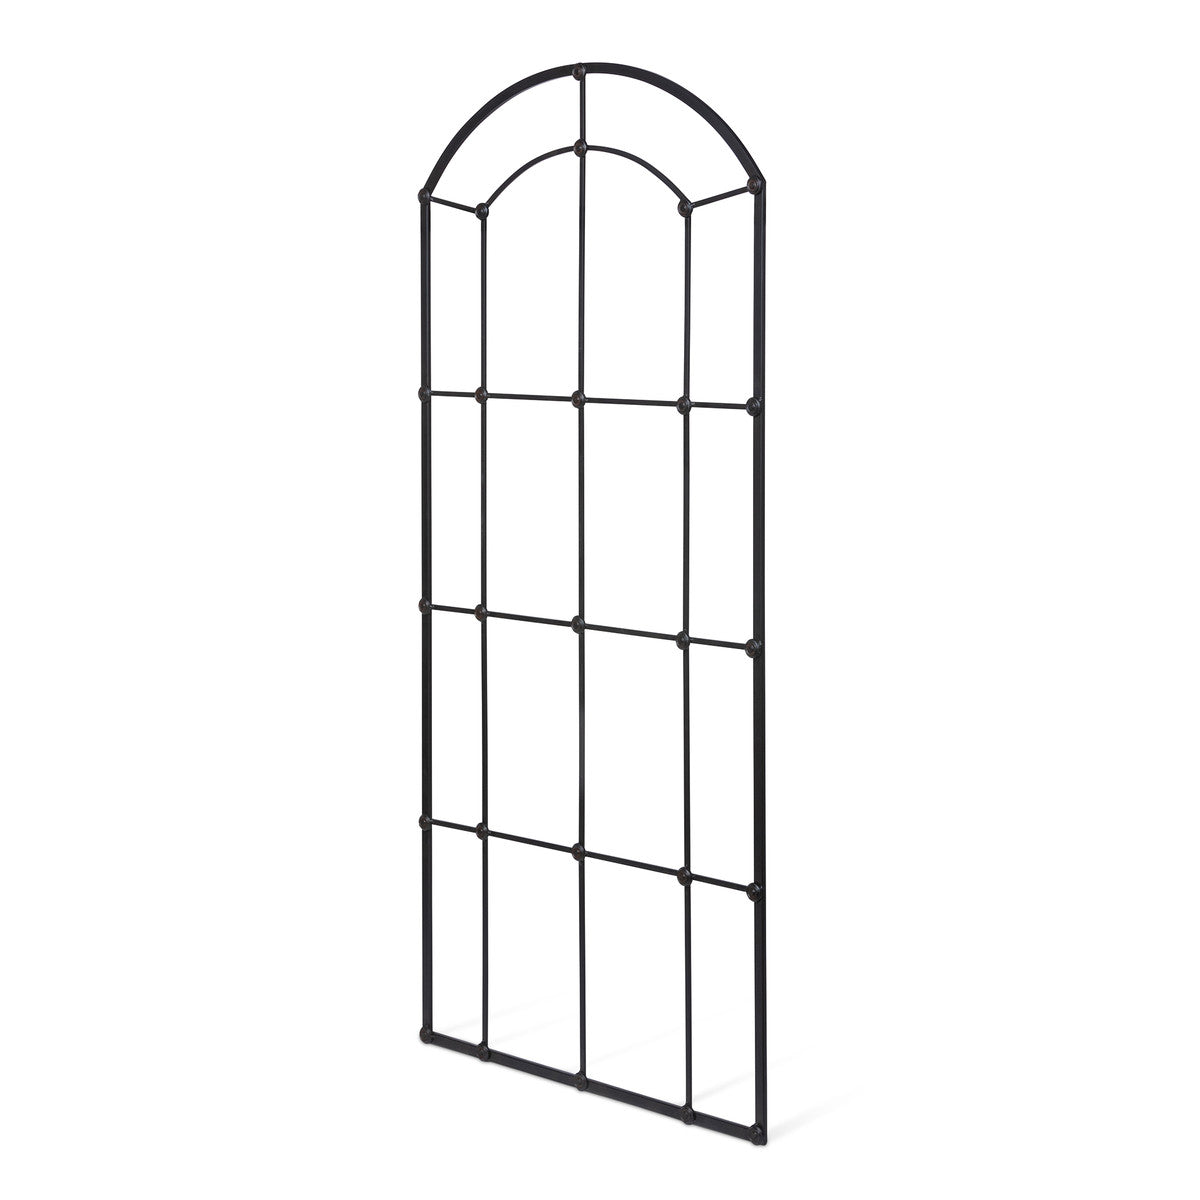 Wilmer Window Frame